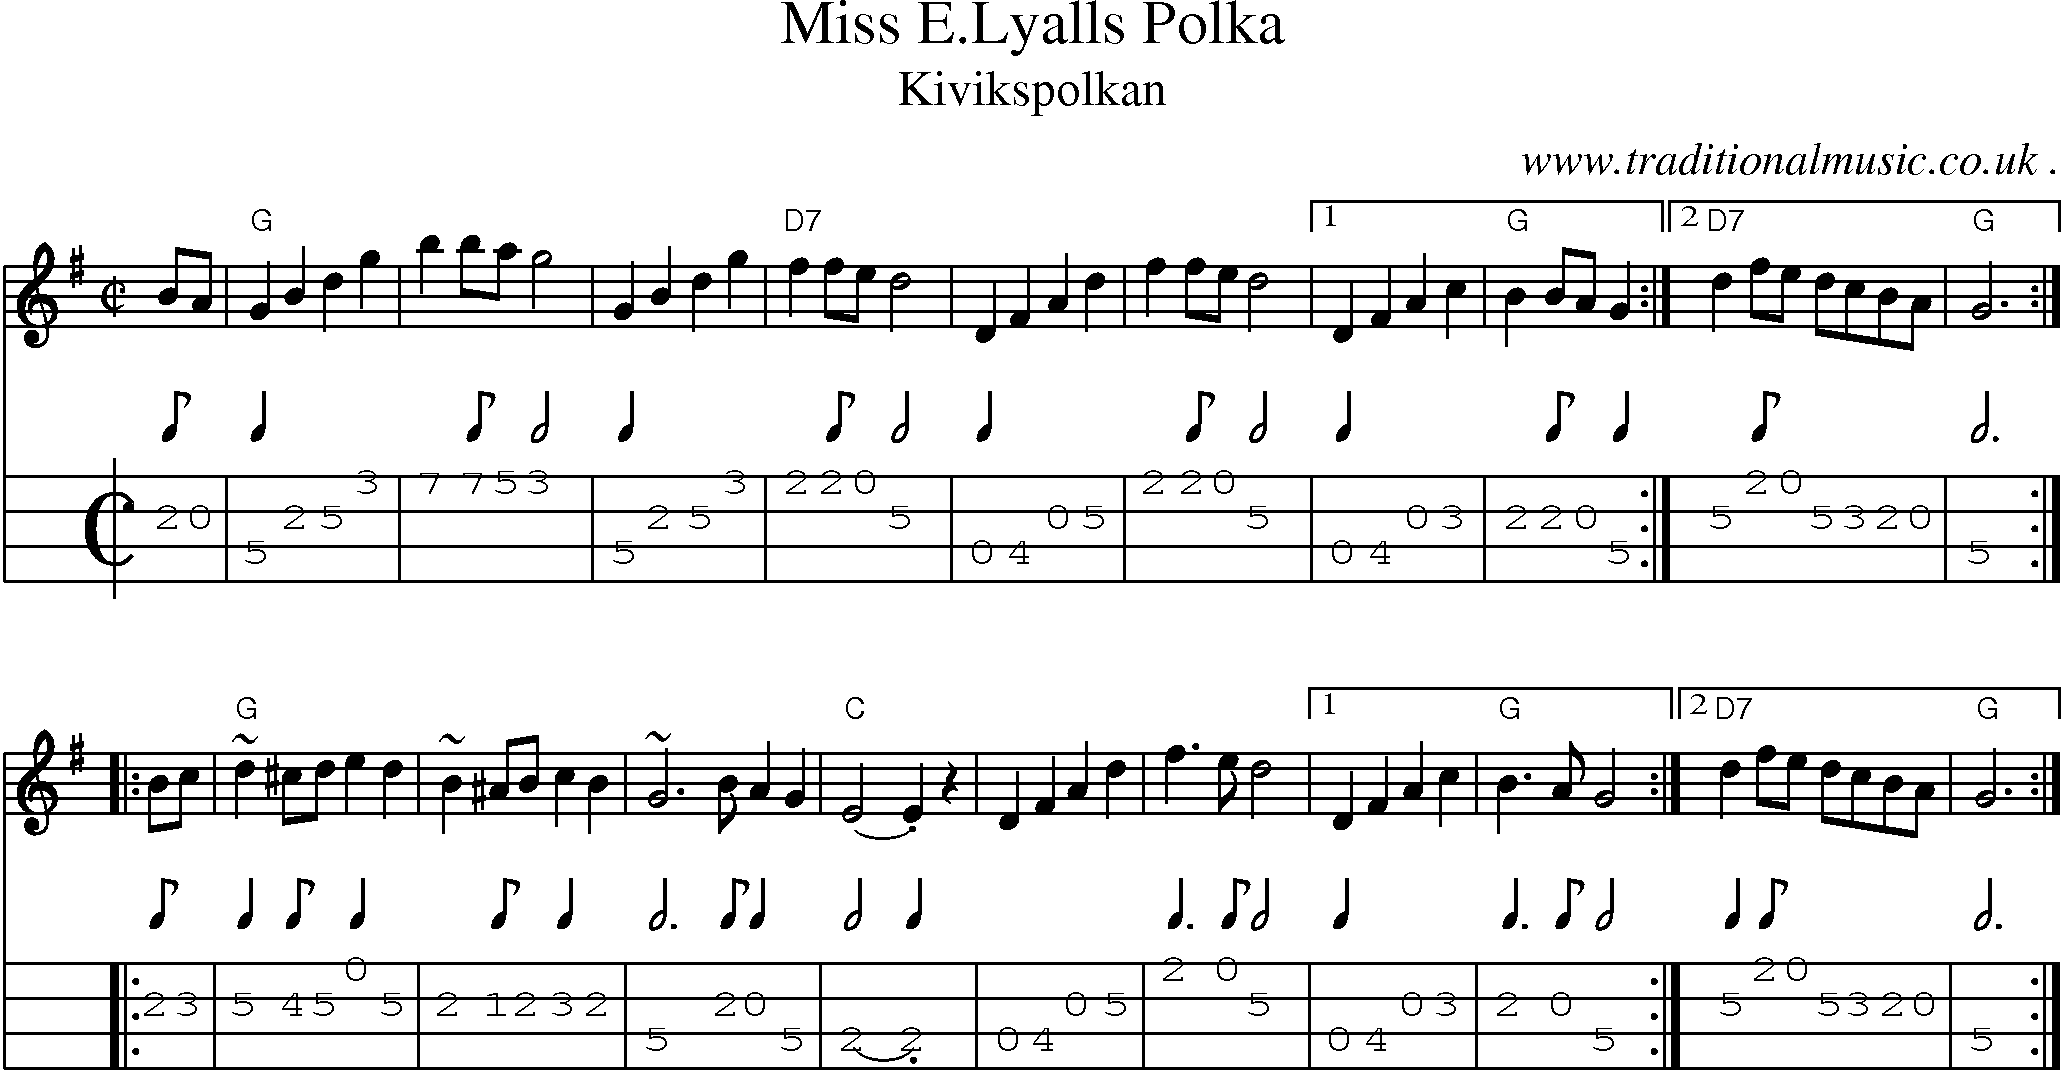 Sheet-music  score, Chords and Mandolin Tabs for Miss Elyalls Polka